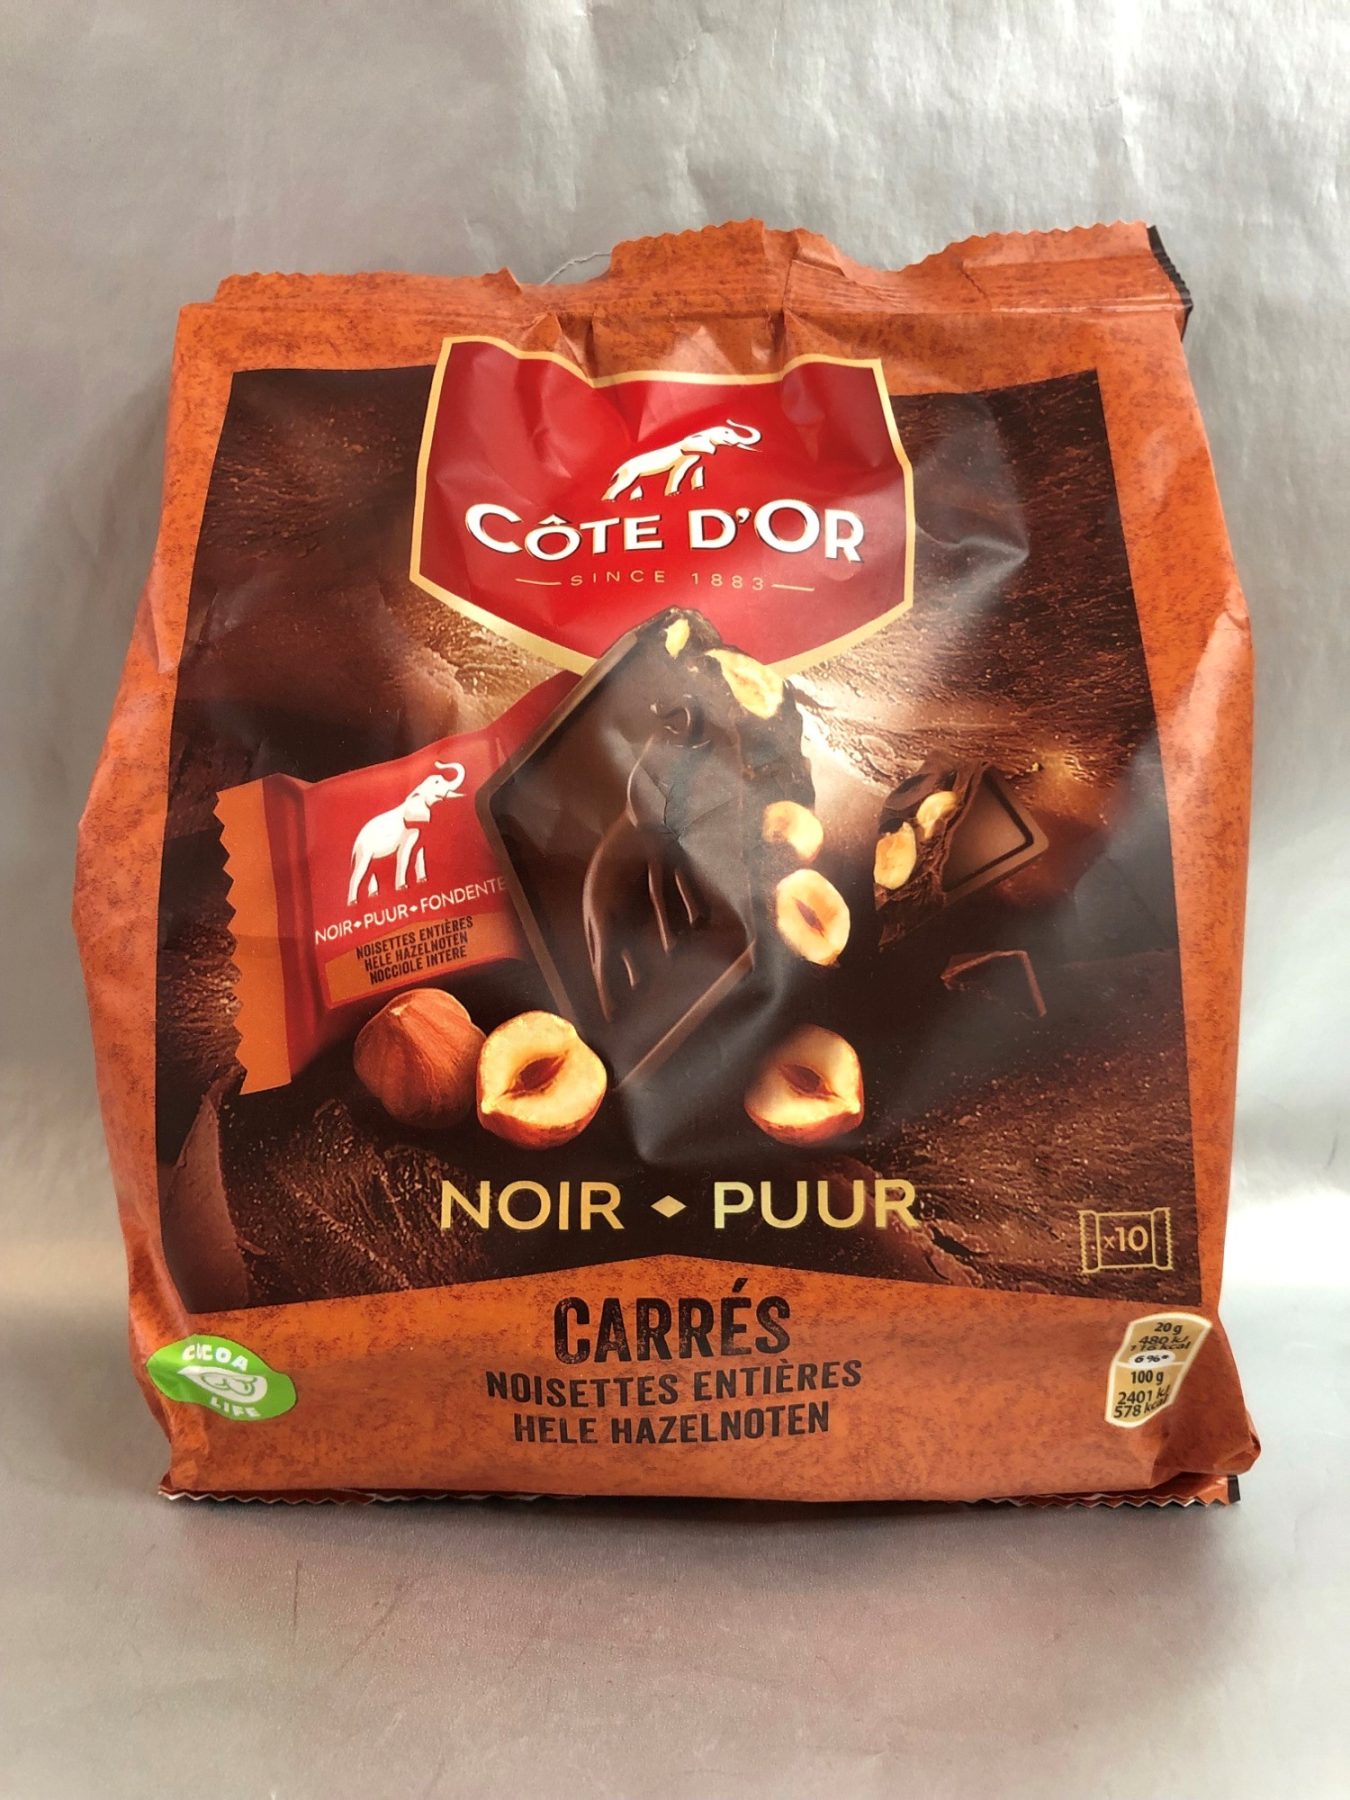 Cote D'Or 'carres' dark chocolate